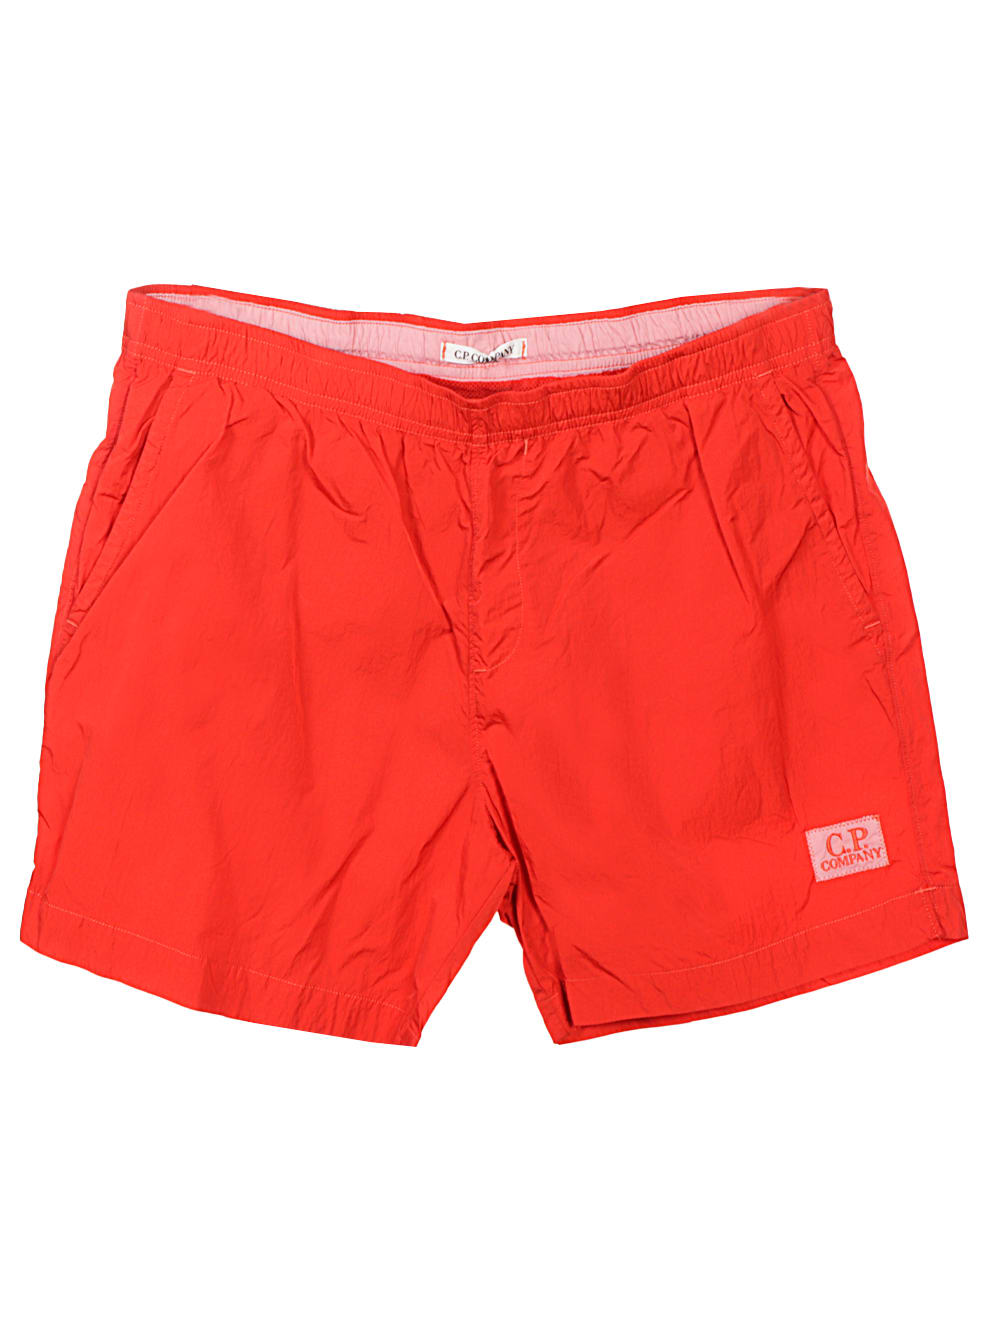 C.P. Company Chrome Boxer Shorts